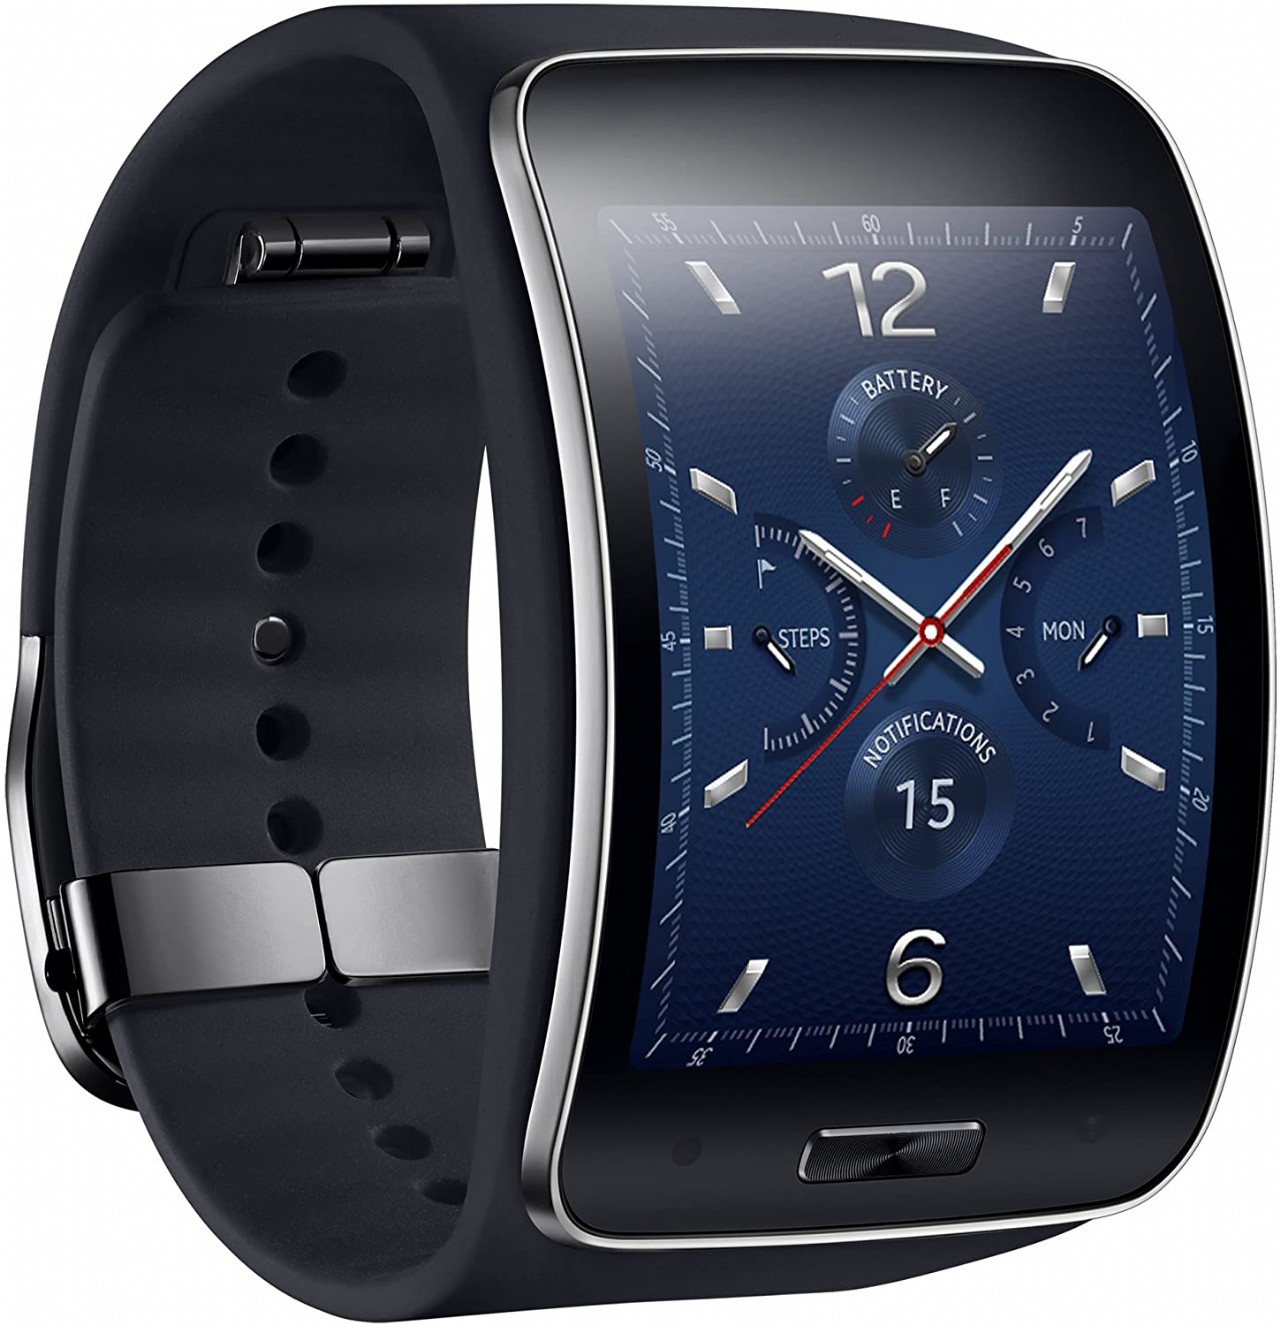 Samsung MAIN-96577 Galaxy Gear S R750 Smart Watch, Black